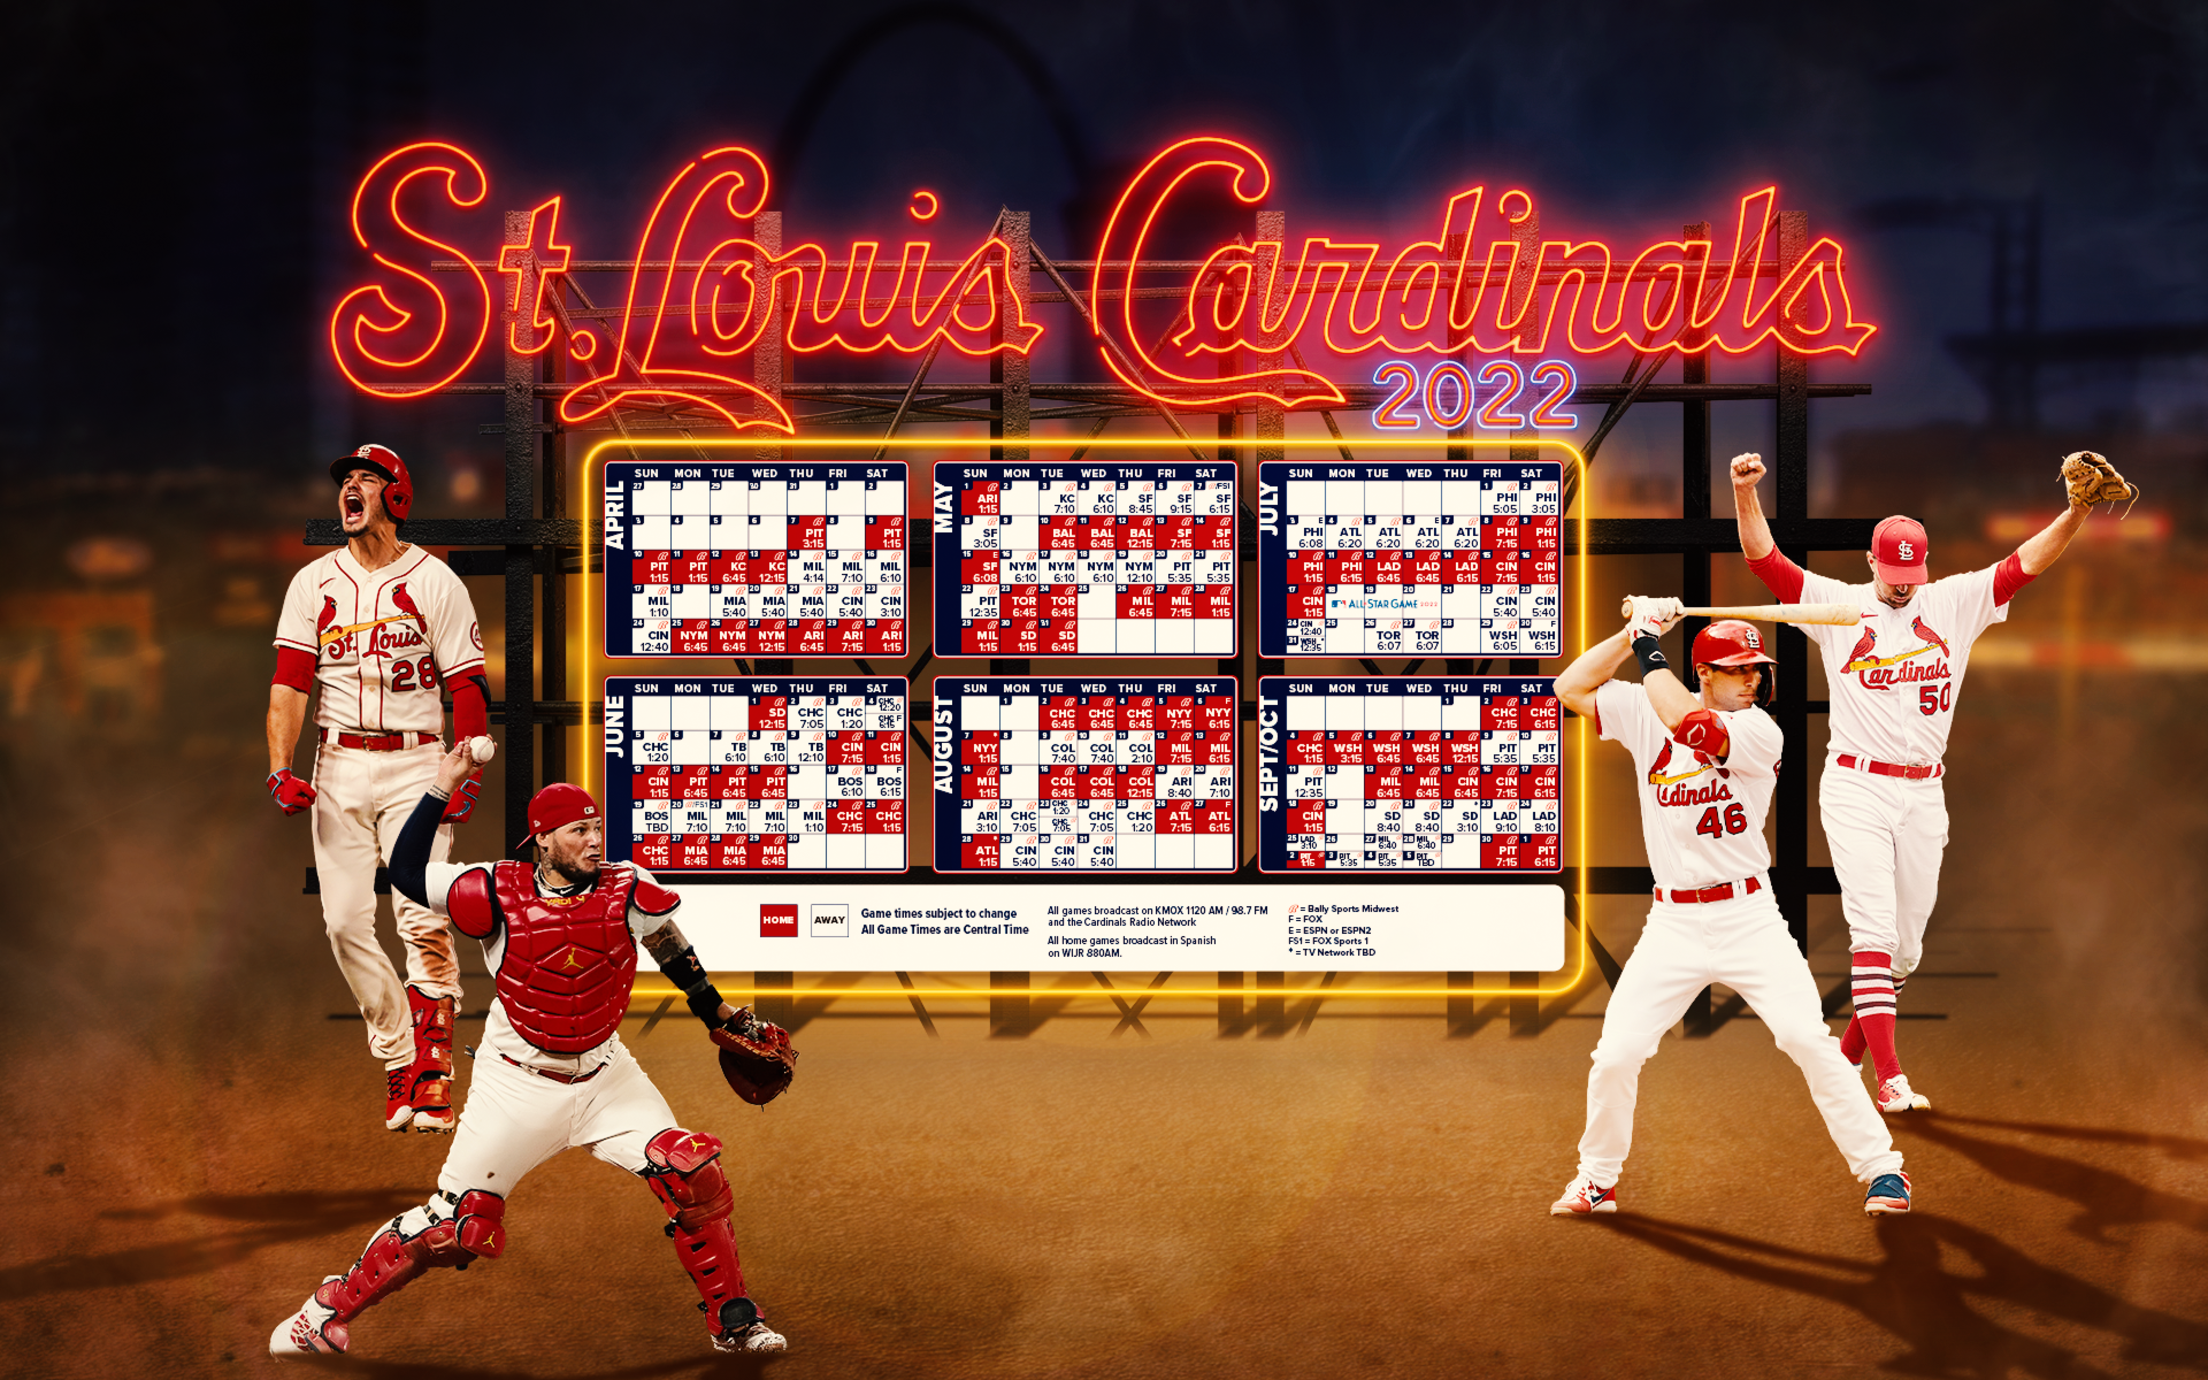 Stl Cardinals Backgrounds